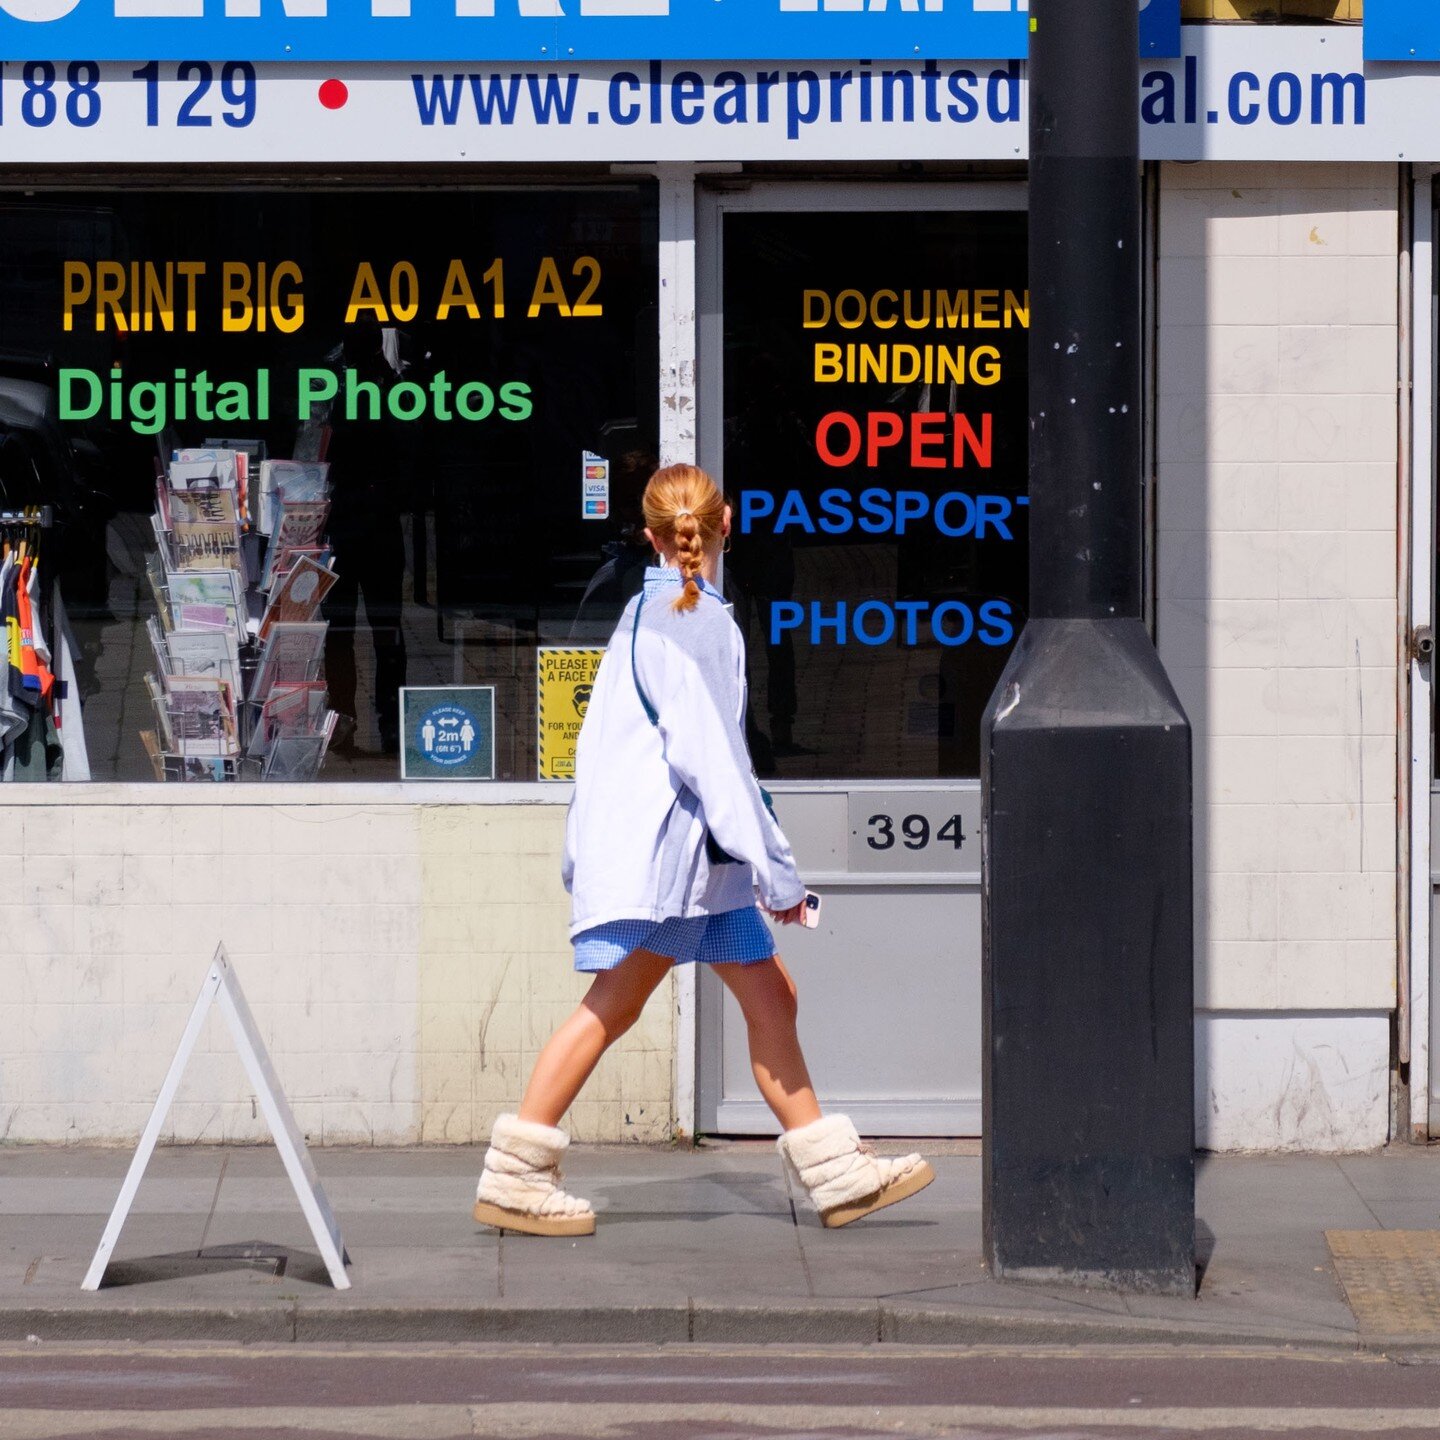 Ordinary People: Brixton

More photos here: https://www.vincentdupontblackshaw.com/home/ordinarypeople-selondon

#brixton #restaurant #london #streetphotography @brixton.village @o2academybrix @london @street_photography_london @streetphotographyinte